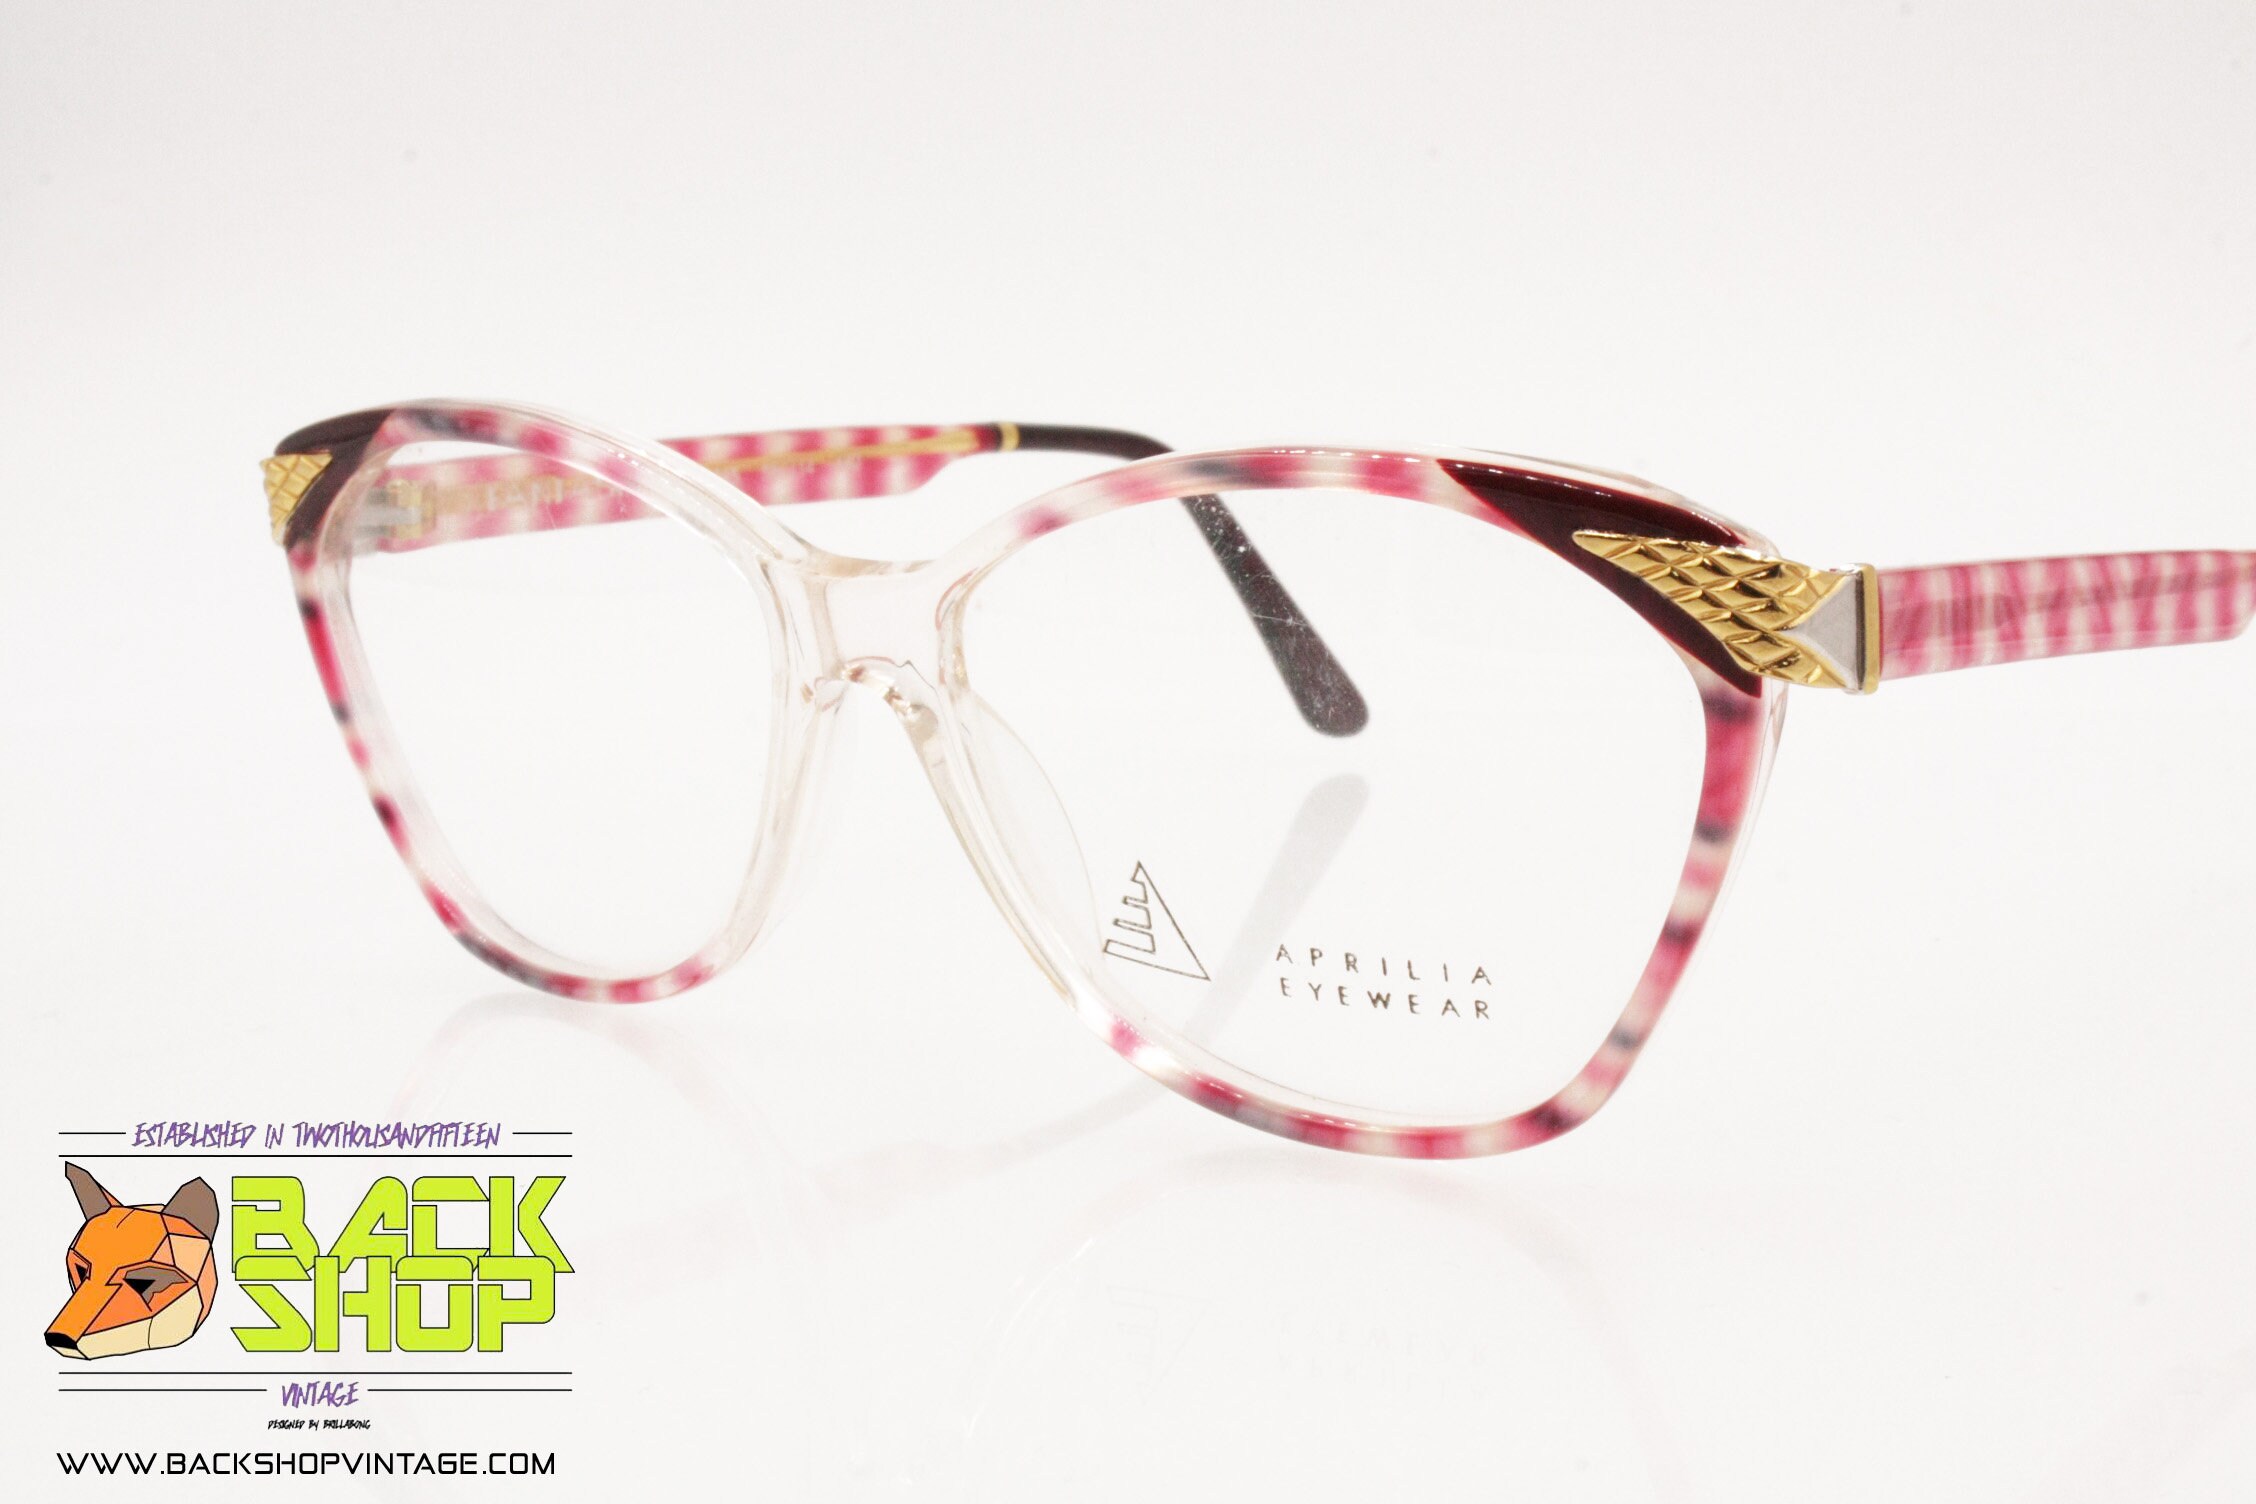 APRILIA EYEWEAR line Accessories Sunglasses & Eyewear Glasses Women's eyeglass frame clear & Red animalier FANTASIA 23 271 Nos New 